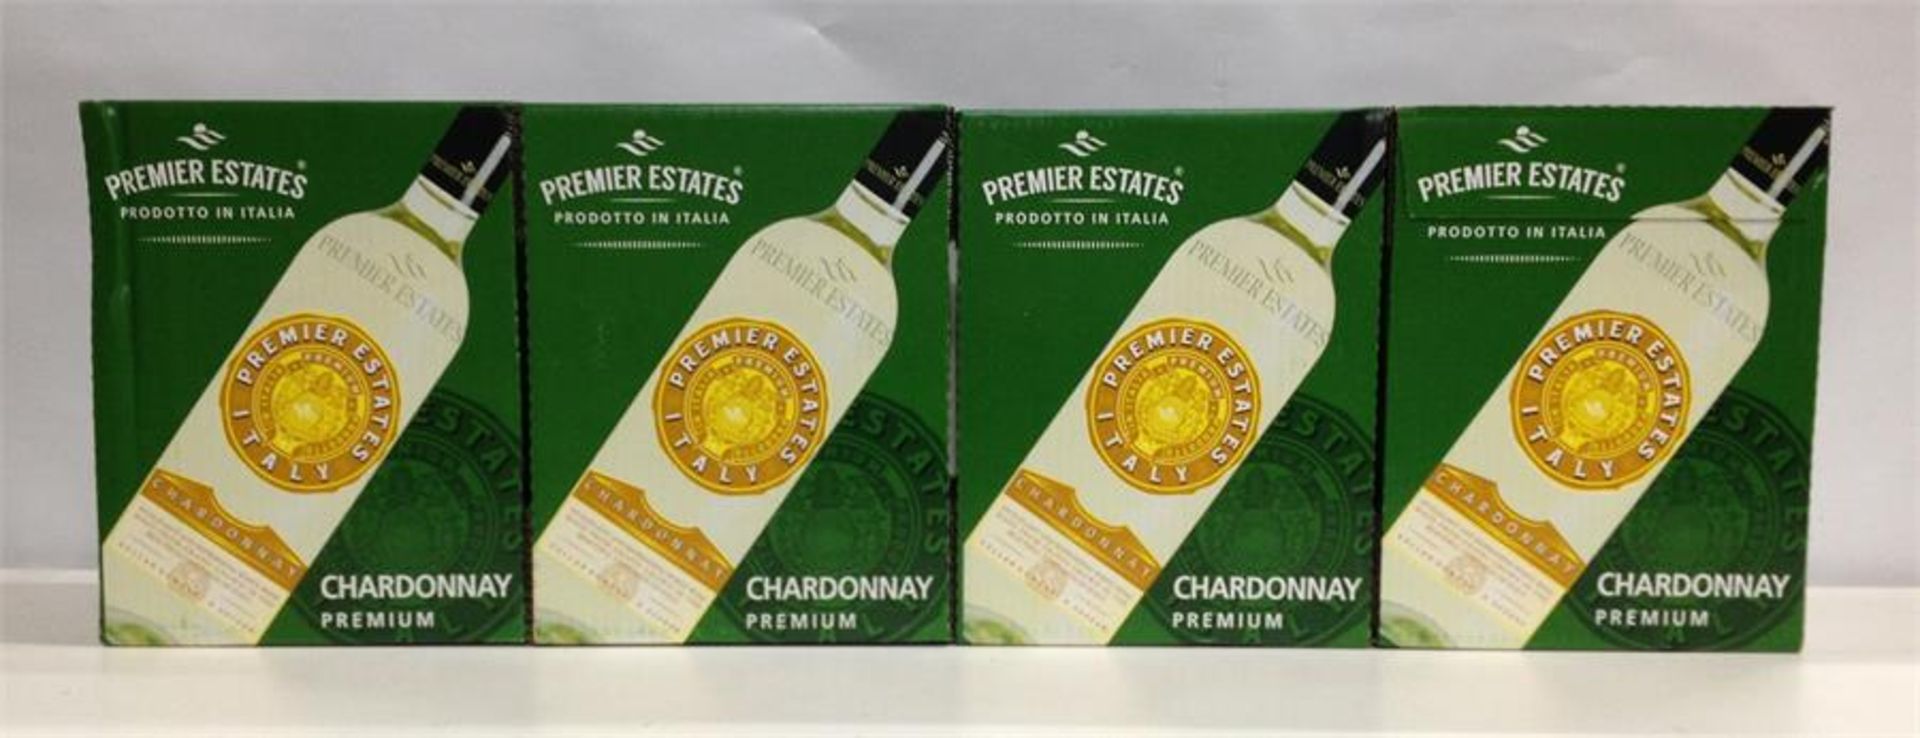 24 x 75cl Bottles Premier Estates Chardonnay Premium White Wine